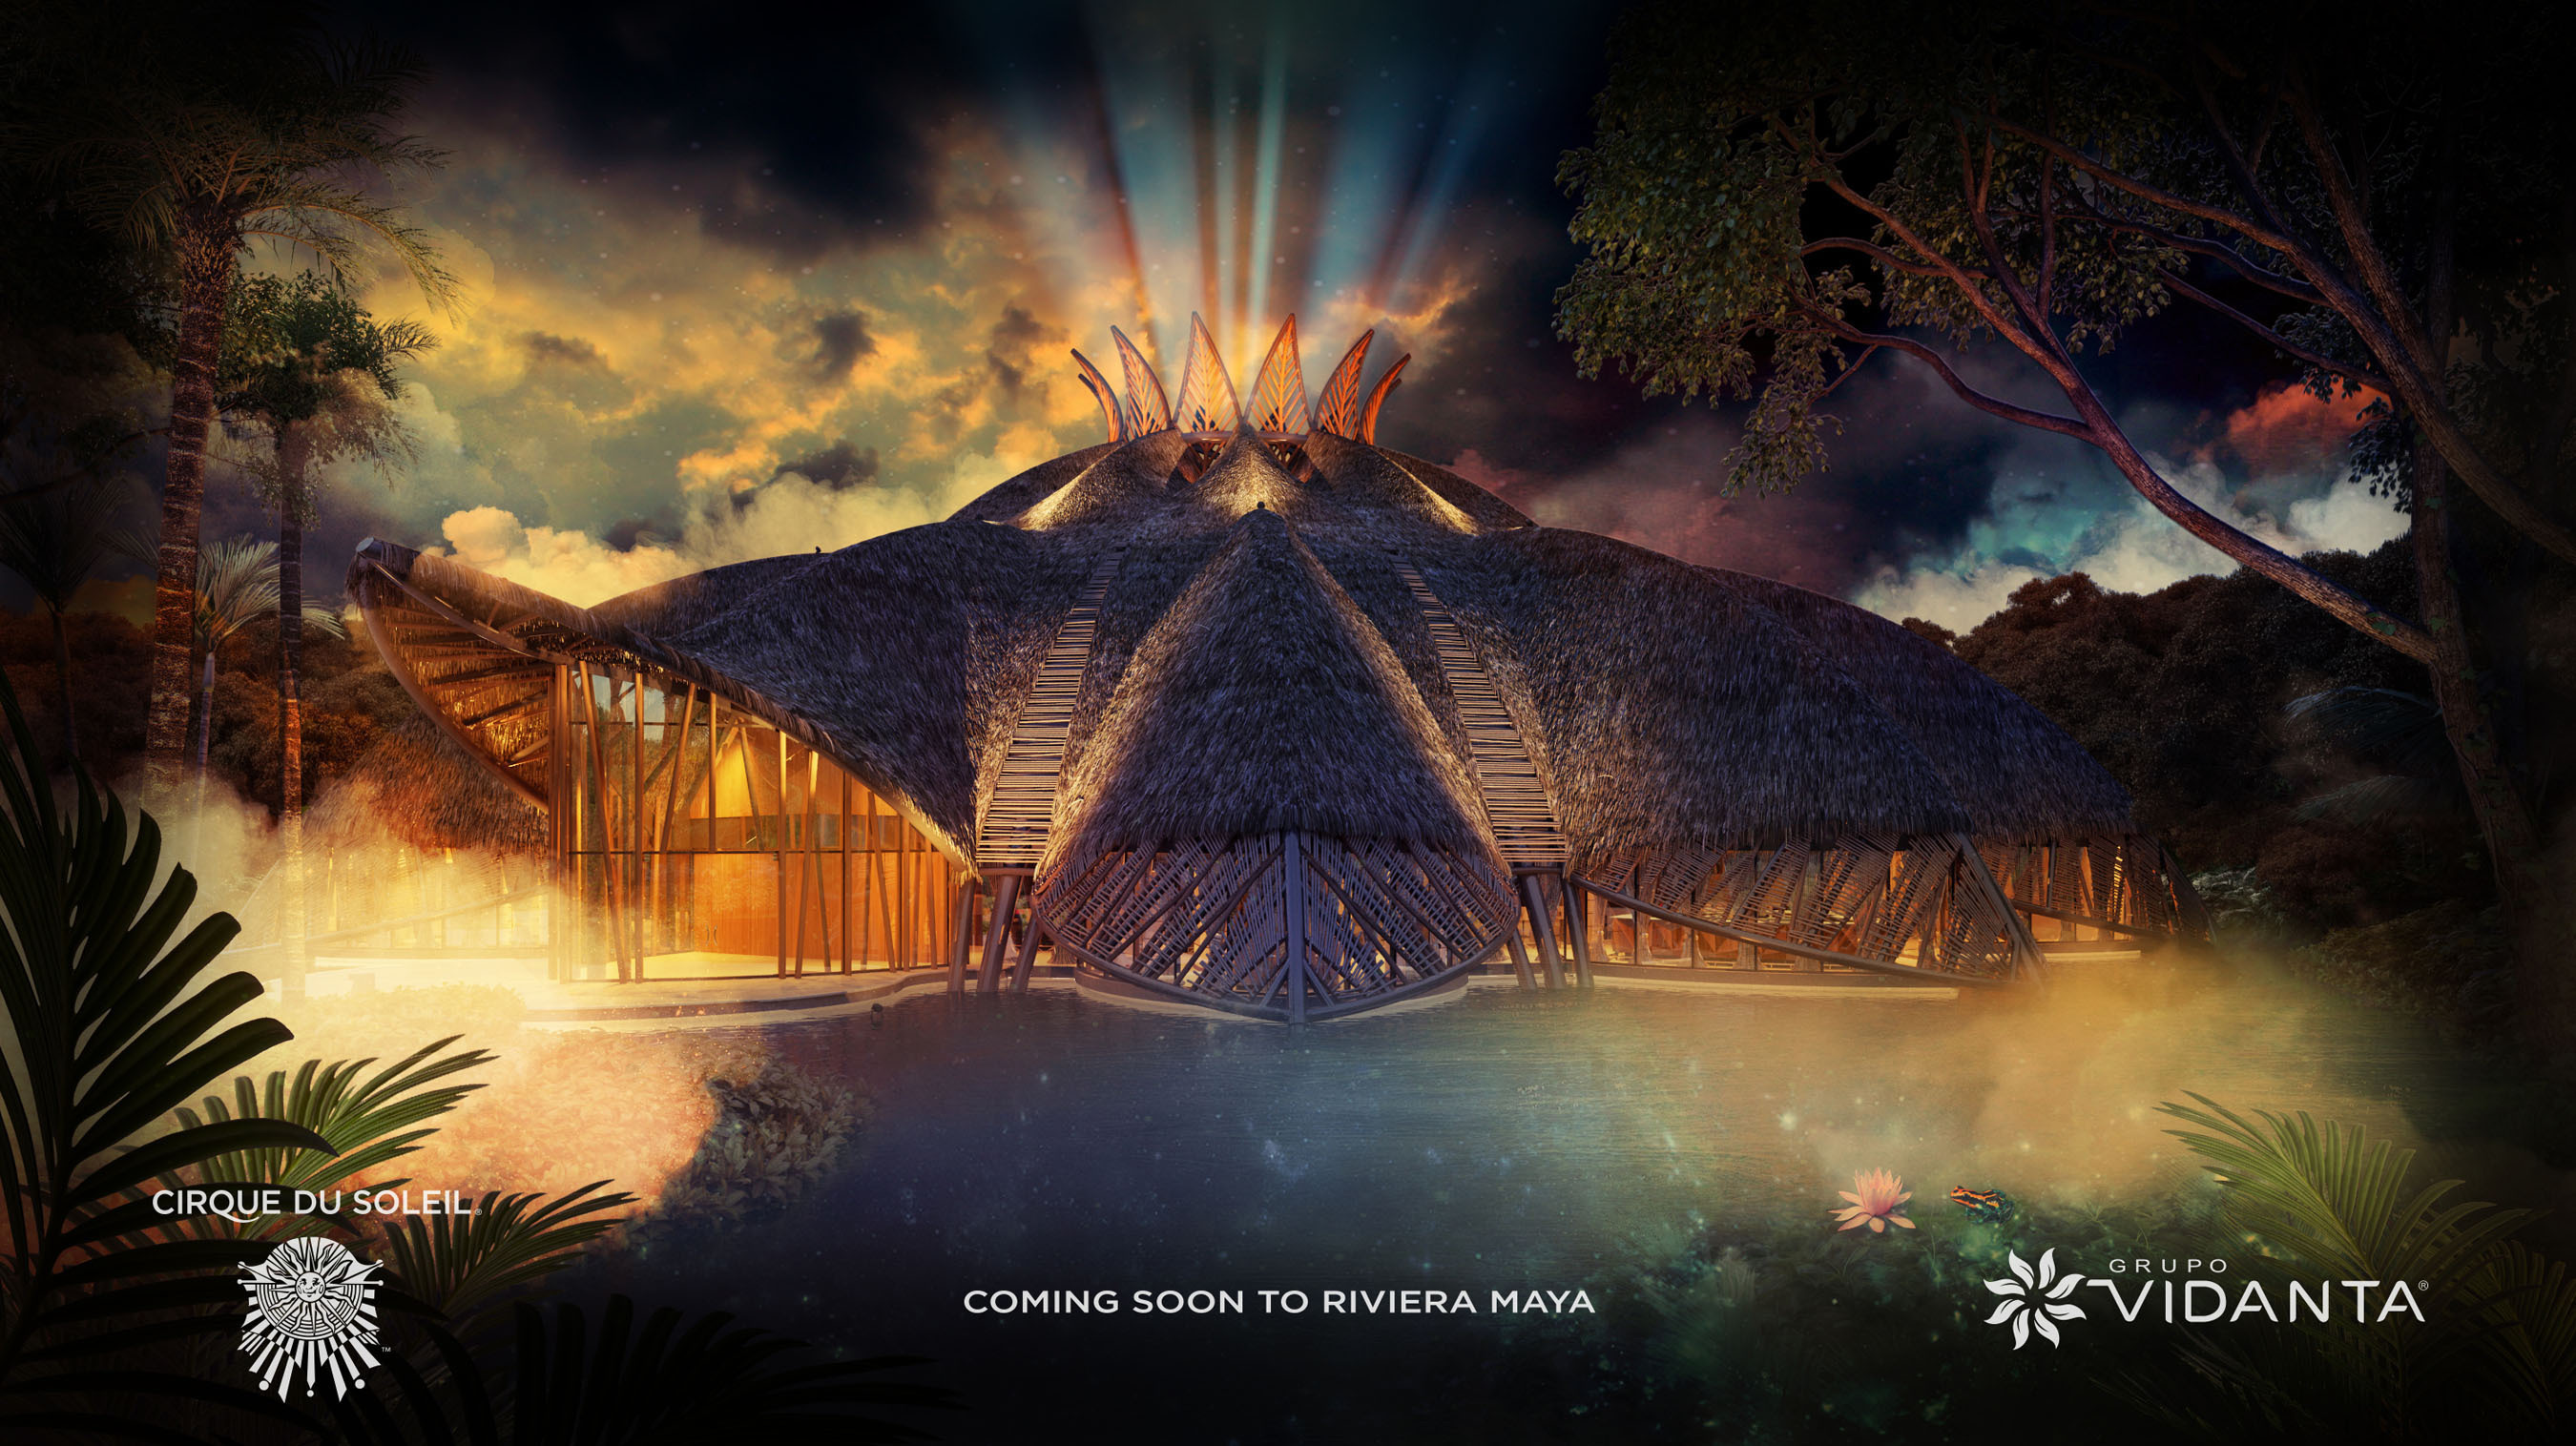 Coming soon to Riviera Maya: an unprecedented intimate dinner and spectacle from Cirque du Soleil and Grupo Vidanta. (PRNewsFoto/Grupo Vidanta) (PRNewsFoto/GRUPO VIDANTA)